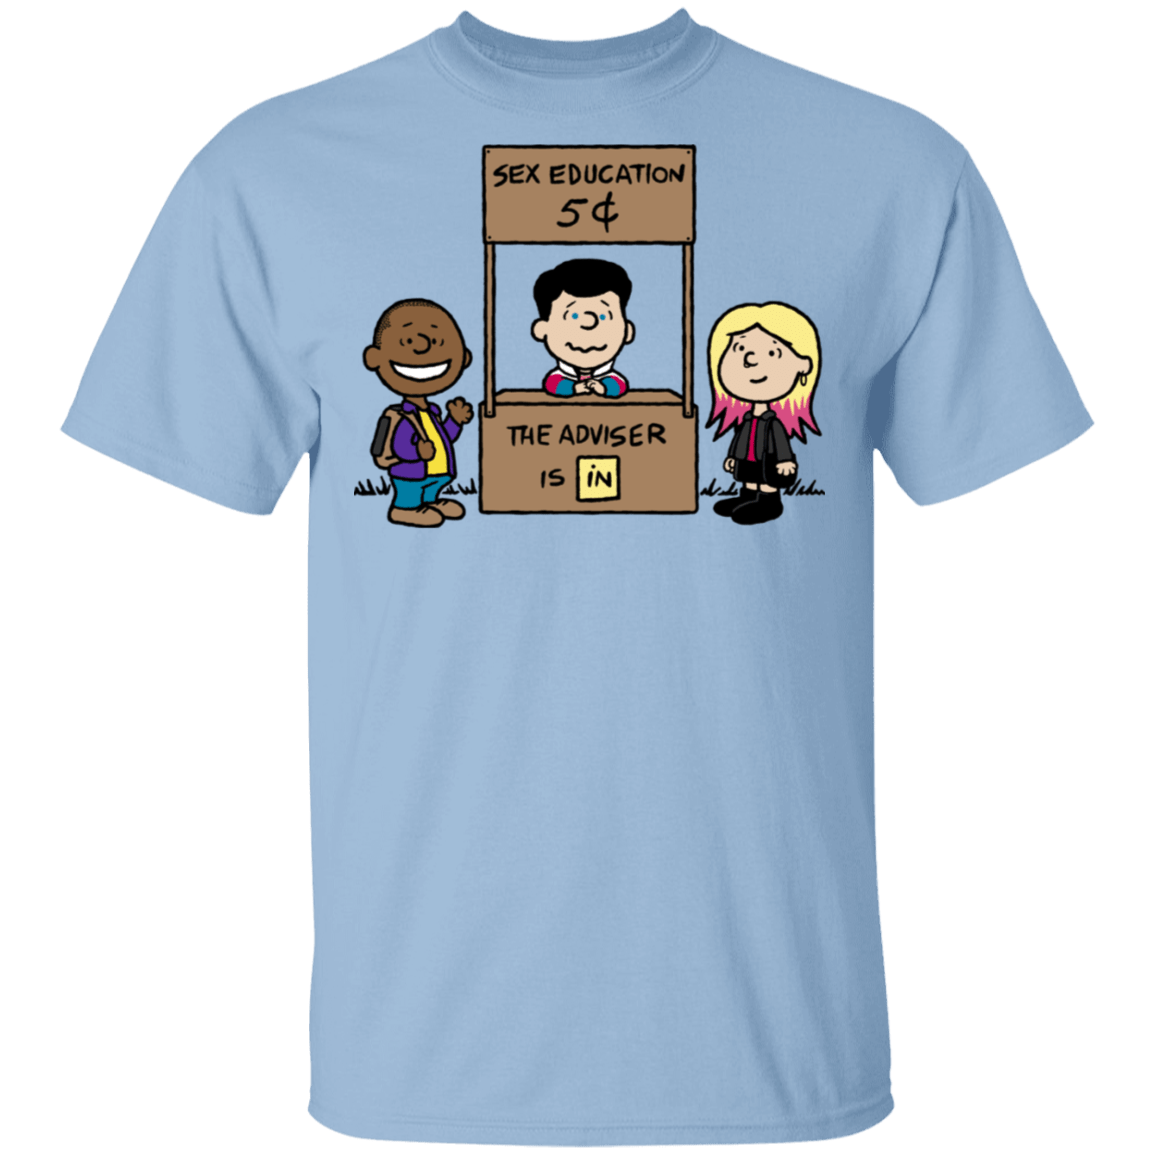 The Adviser T-Shirt